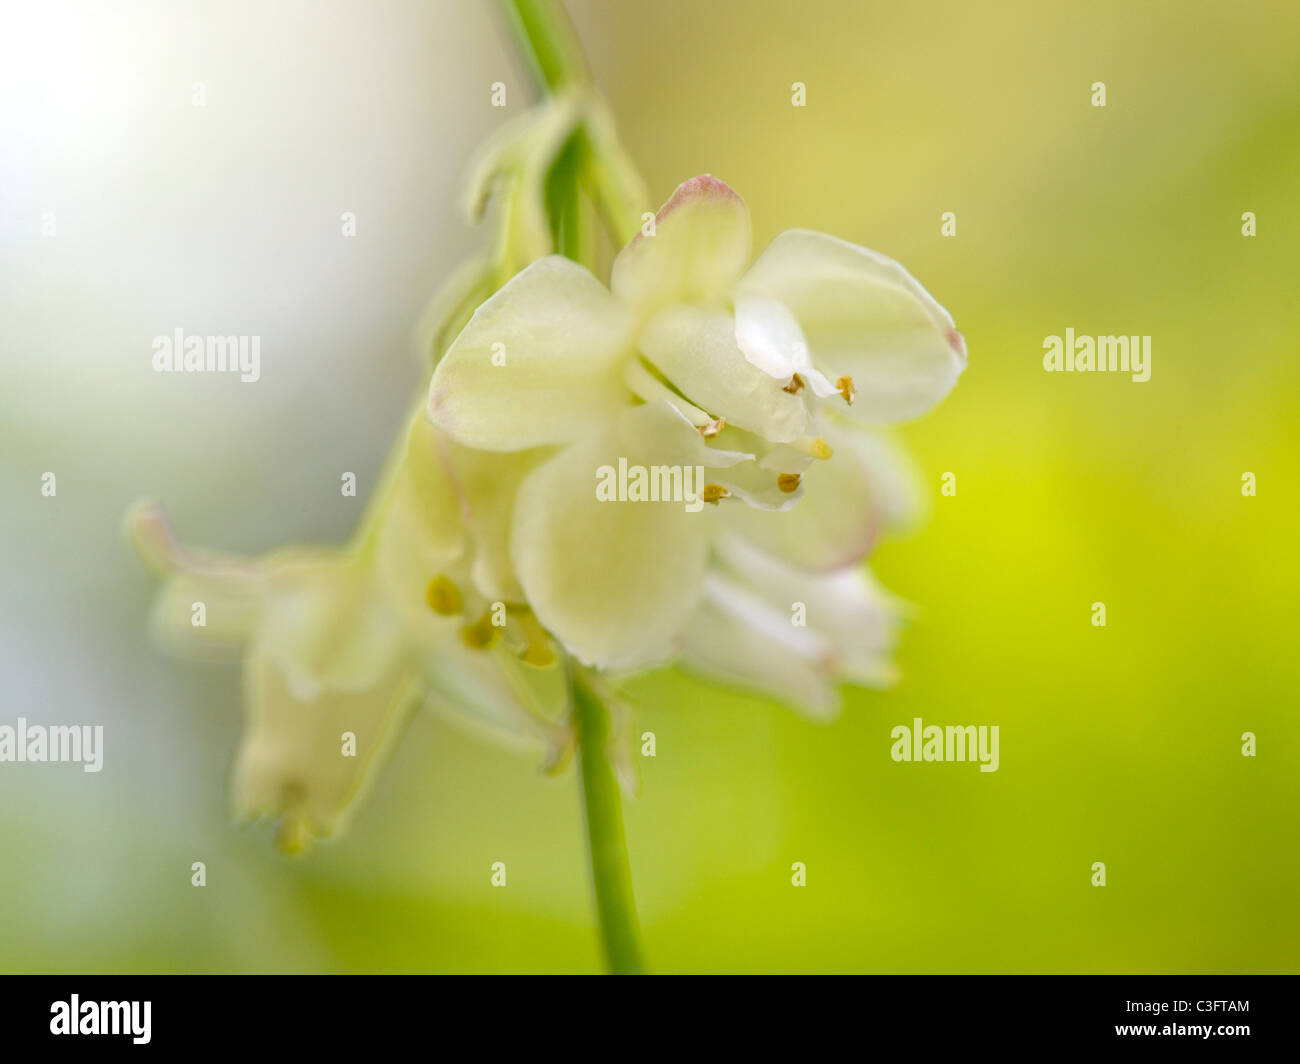 Bladdernut flower, staphylea pinnata Stock Photo